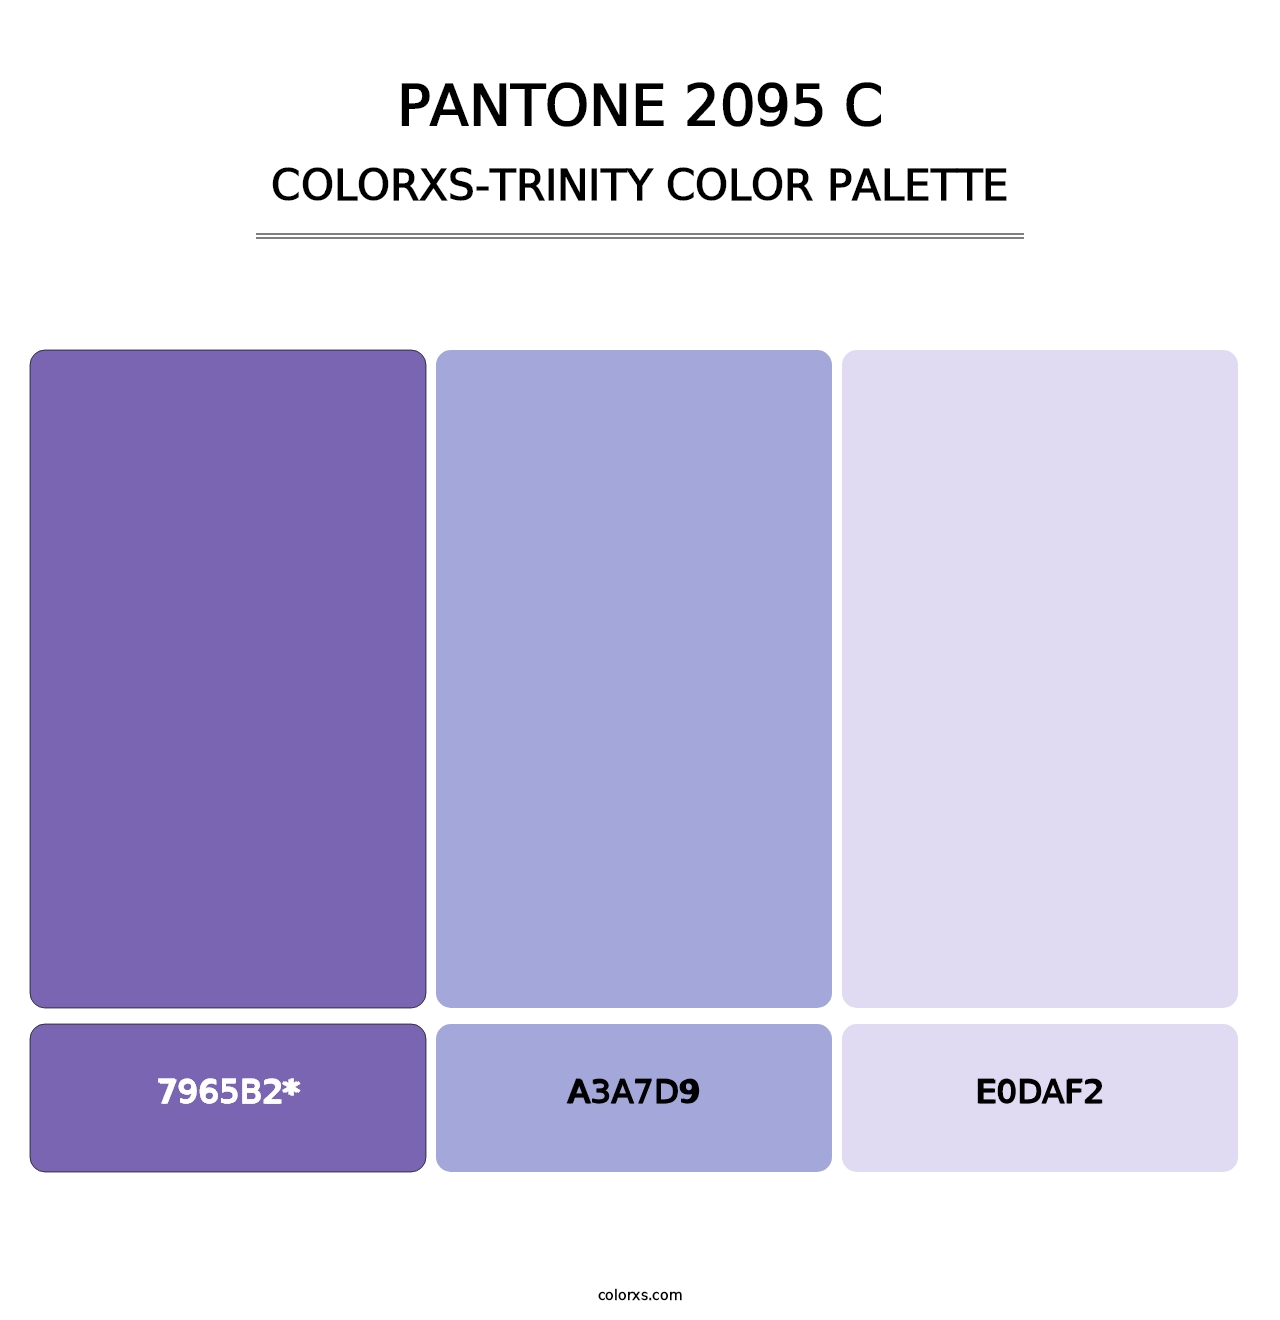 PANTONE 2095 C - Colorxs Trinity Palette